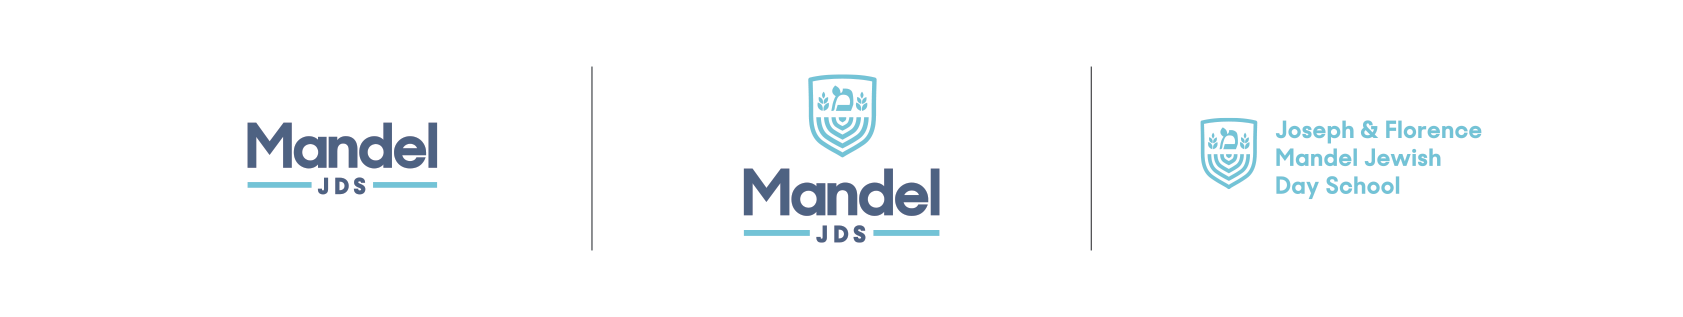 AGN Mandel 3 Logos